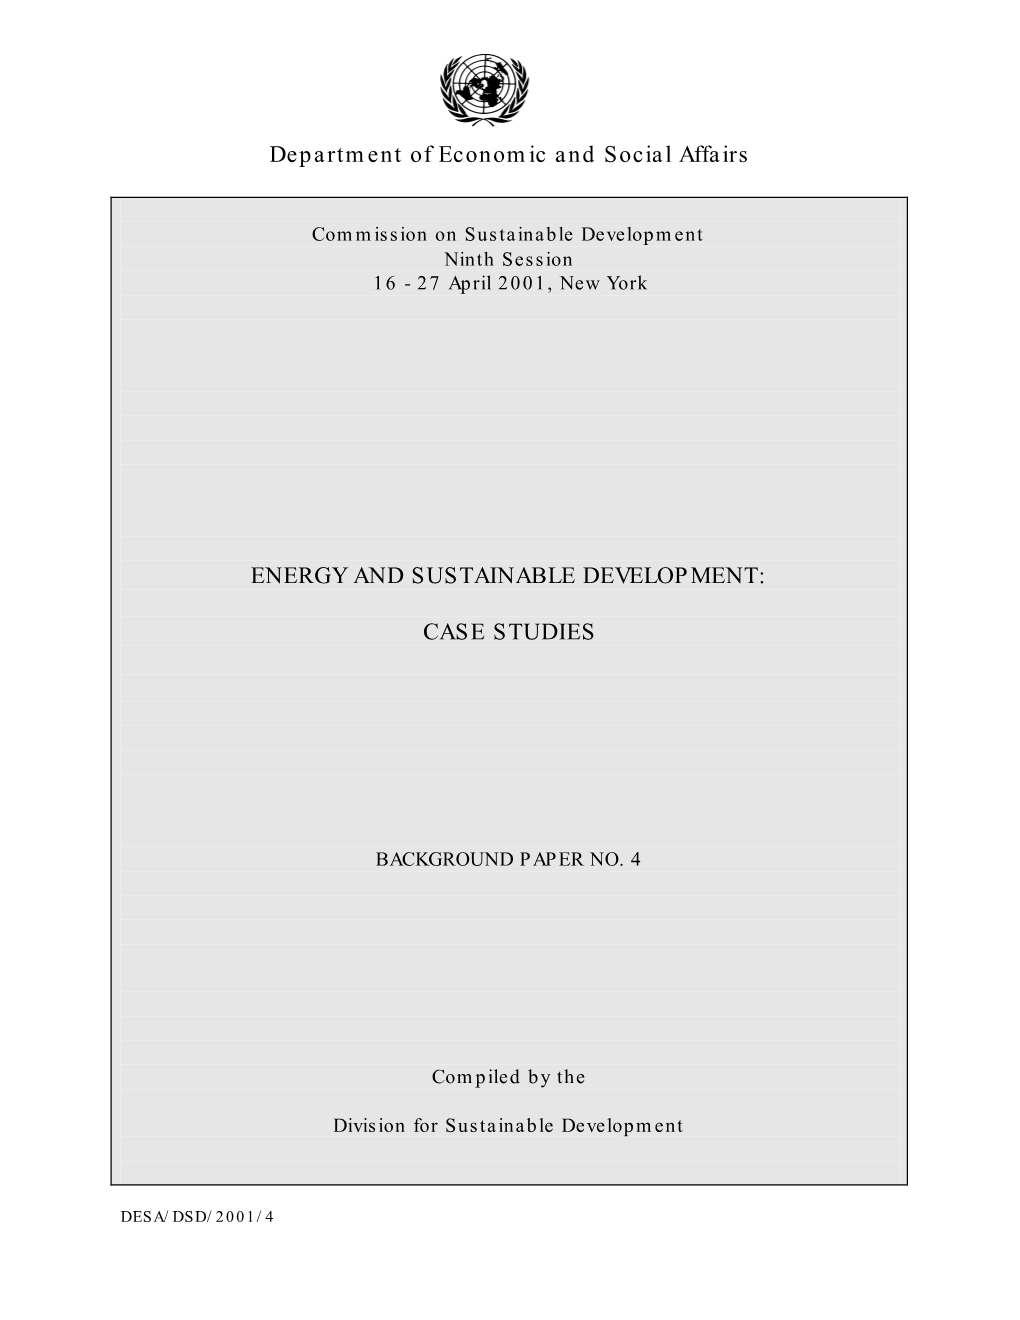 Energy and Sustainable Development: Case Studies